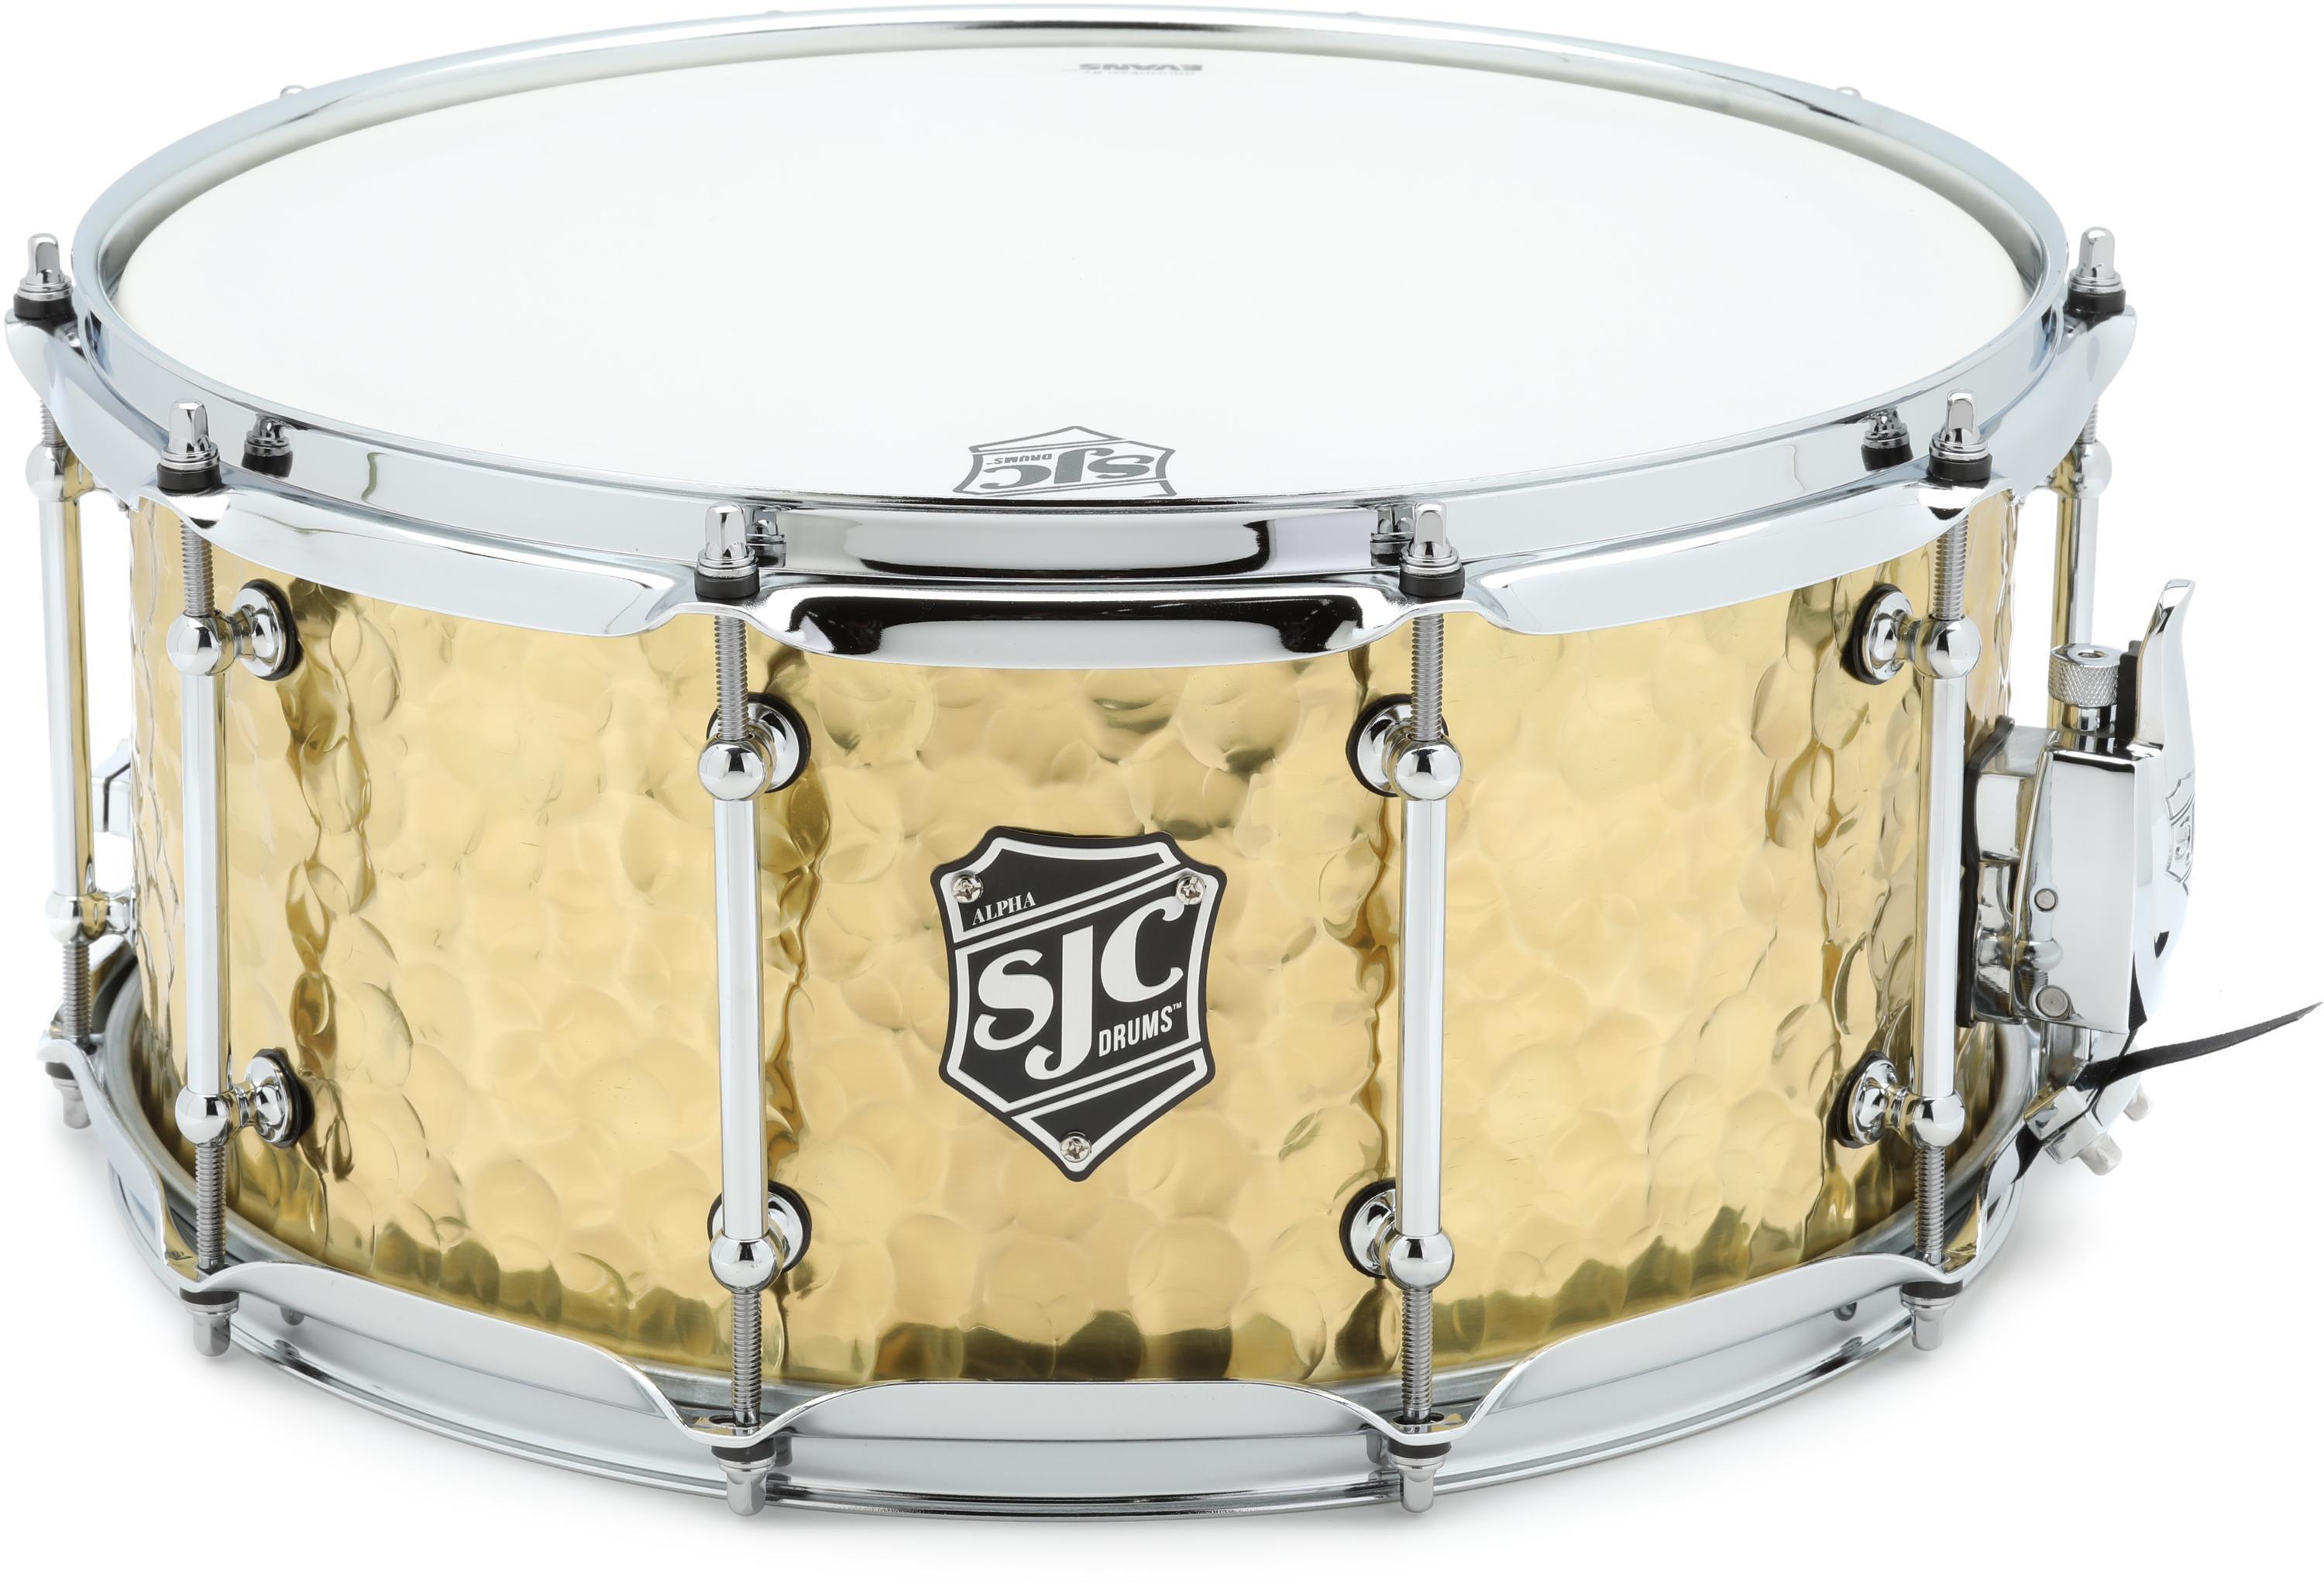 SJC Custom Drums Alpha Hammered Brass Snare Drum - 6.5 x 14-inch - Polished